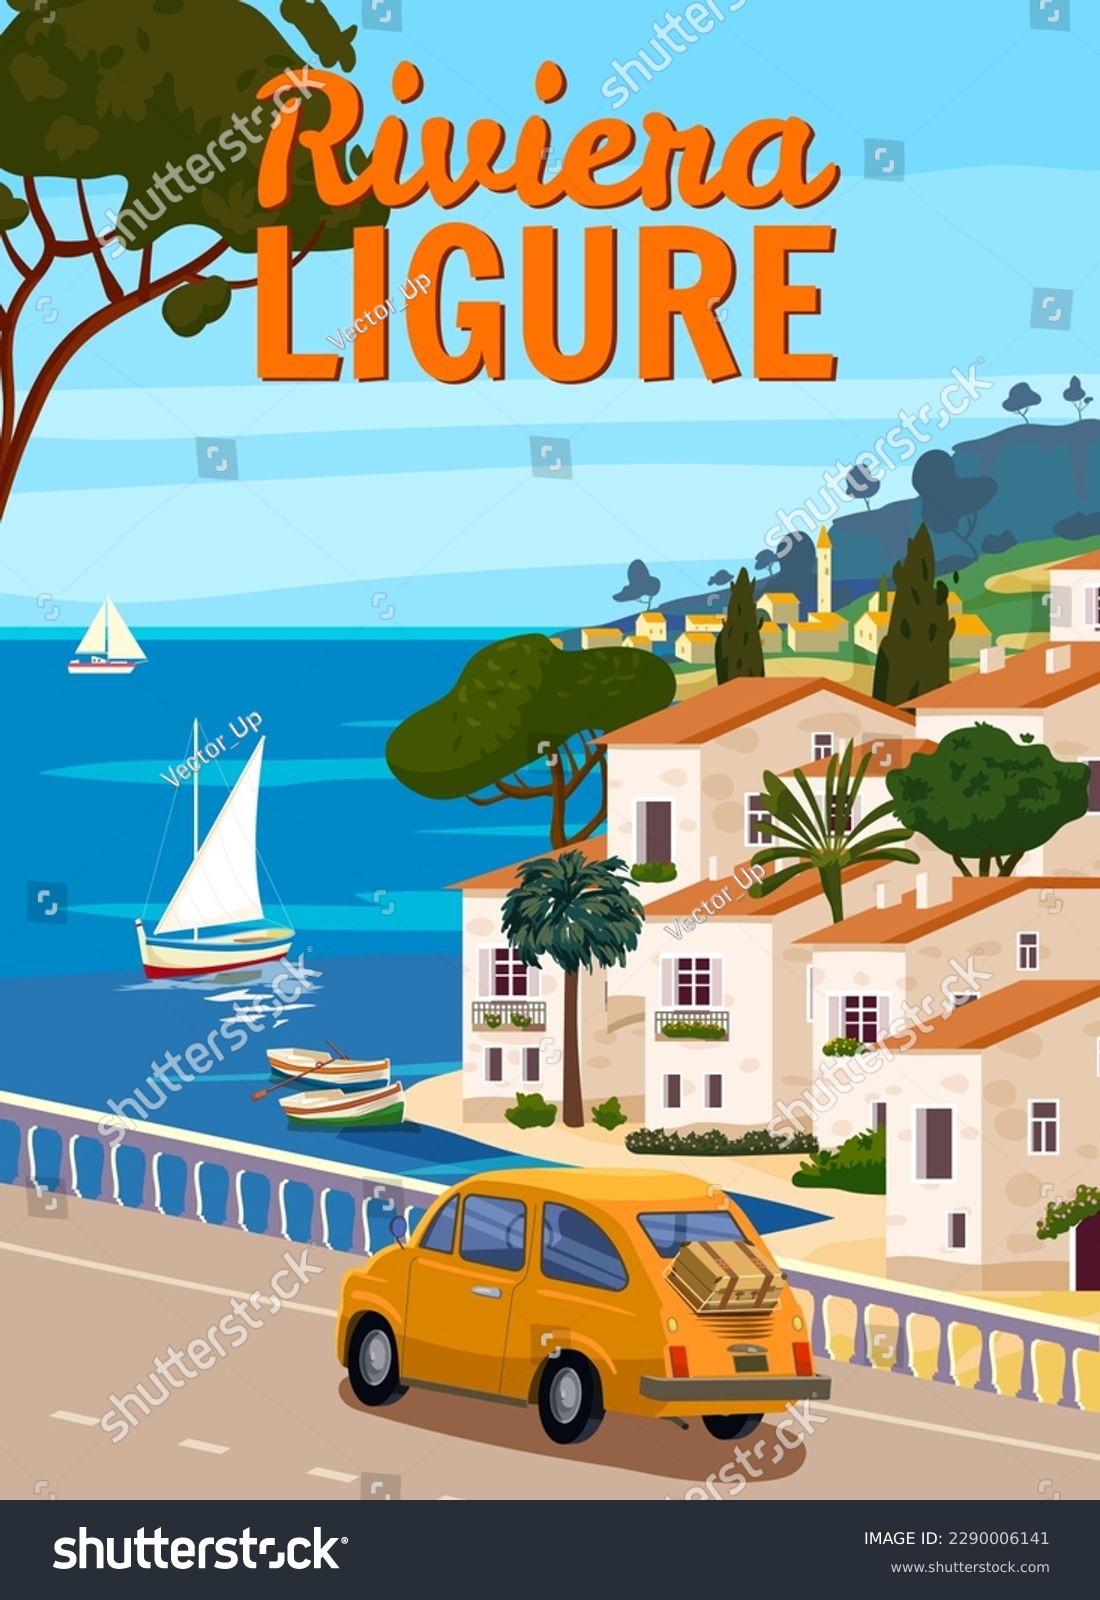 SVG of Riviera Ligure Italy, mediterranean romantic landscape, mountains, seaside town, sea. Retro poster travel svg